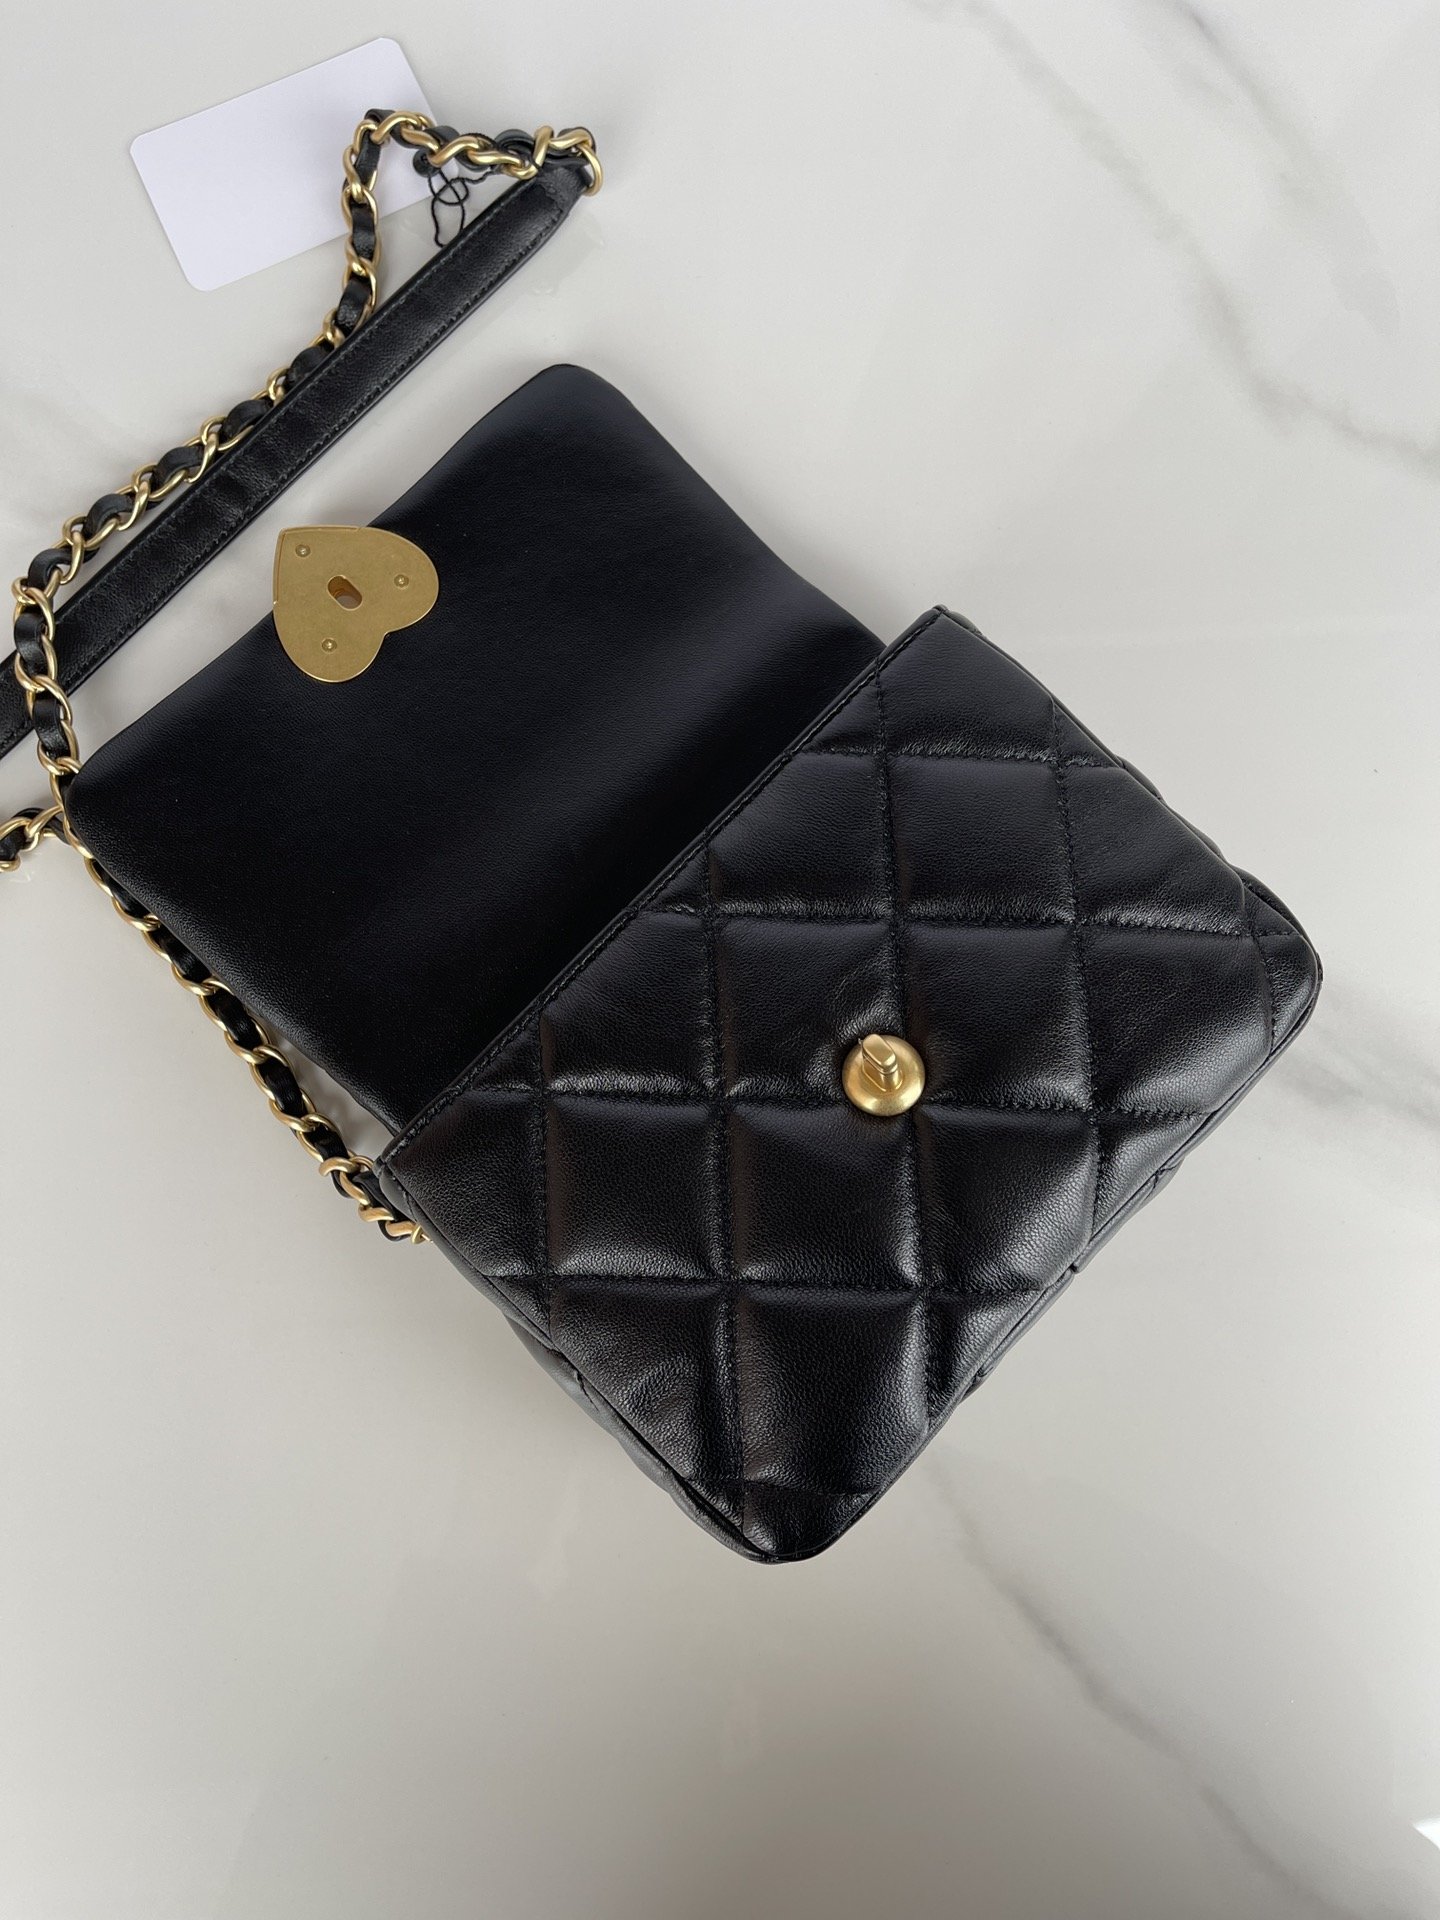 A bag Mini Flap Bag AS3979 18 cm, black фото 6